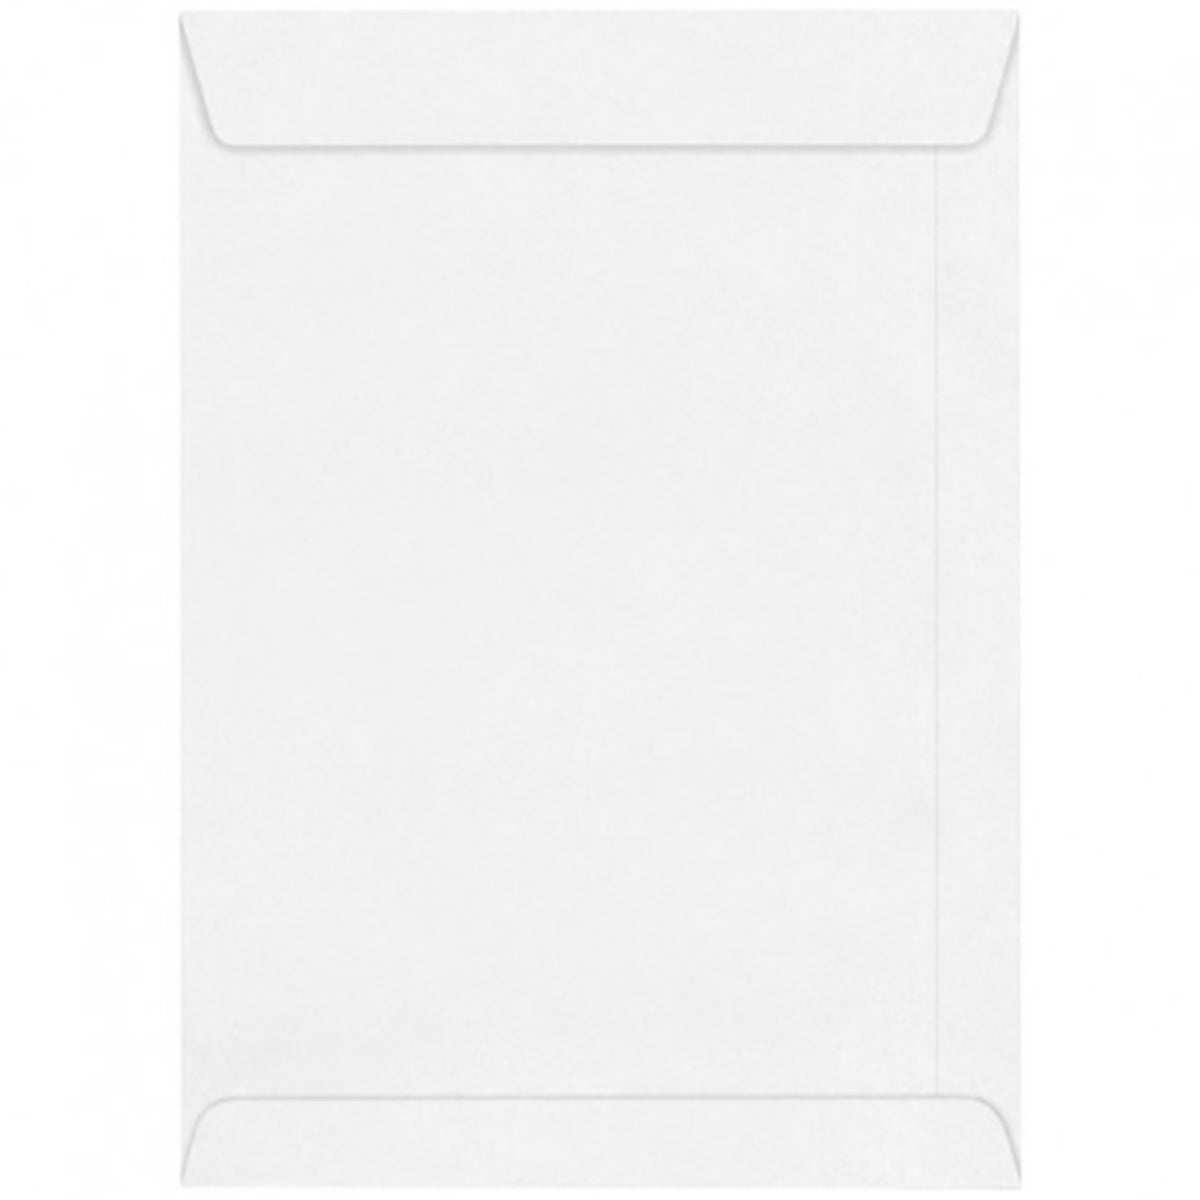 Hispapel Envelope 450 x 367 mm, 17.5 x 14.5 inches, 100gsm, White